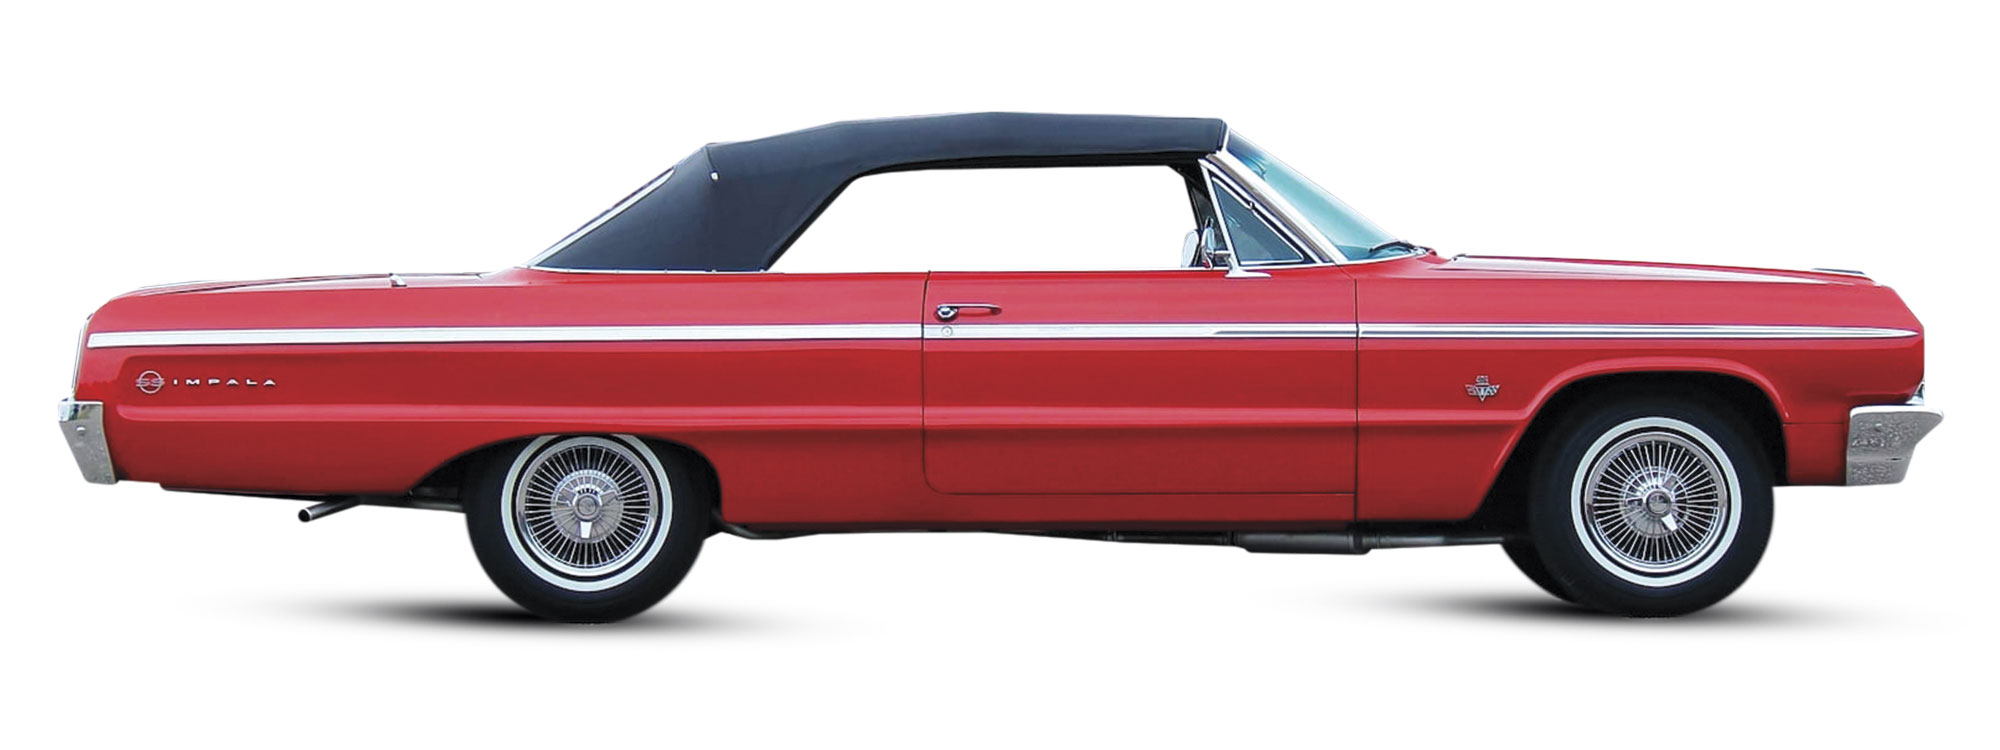 Unmodified 1964 Chevrolet Impala